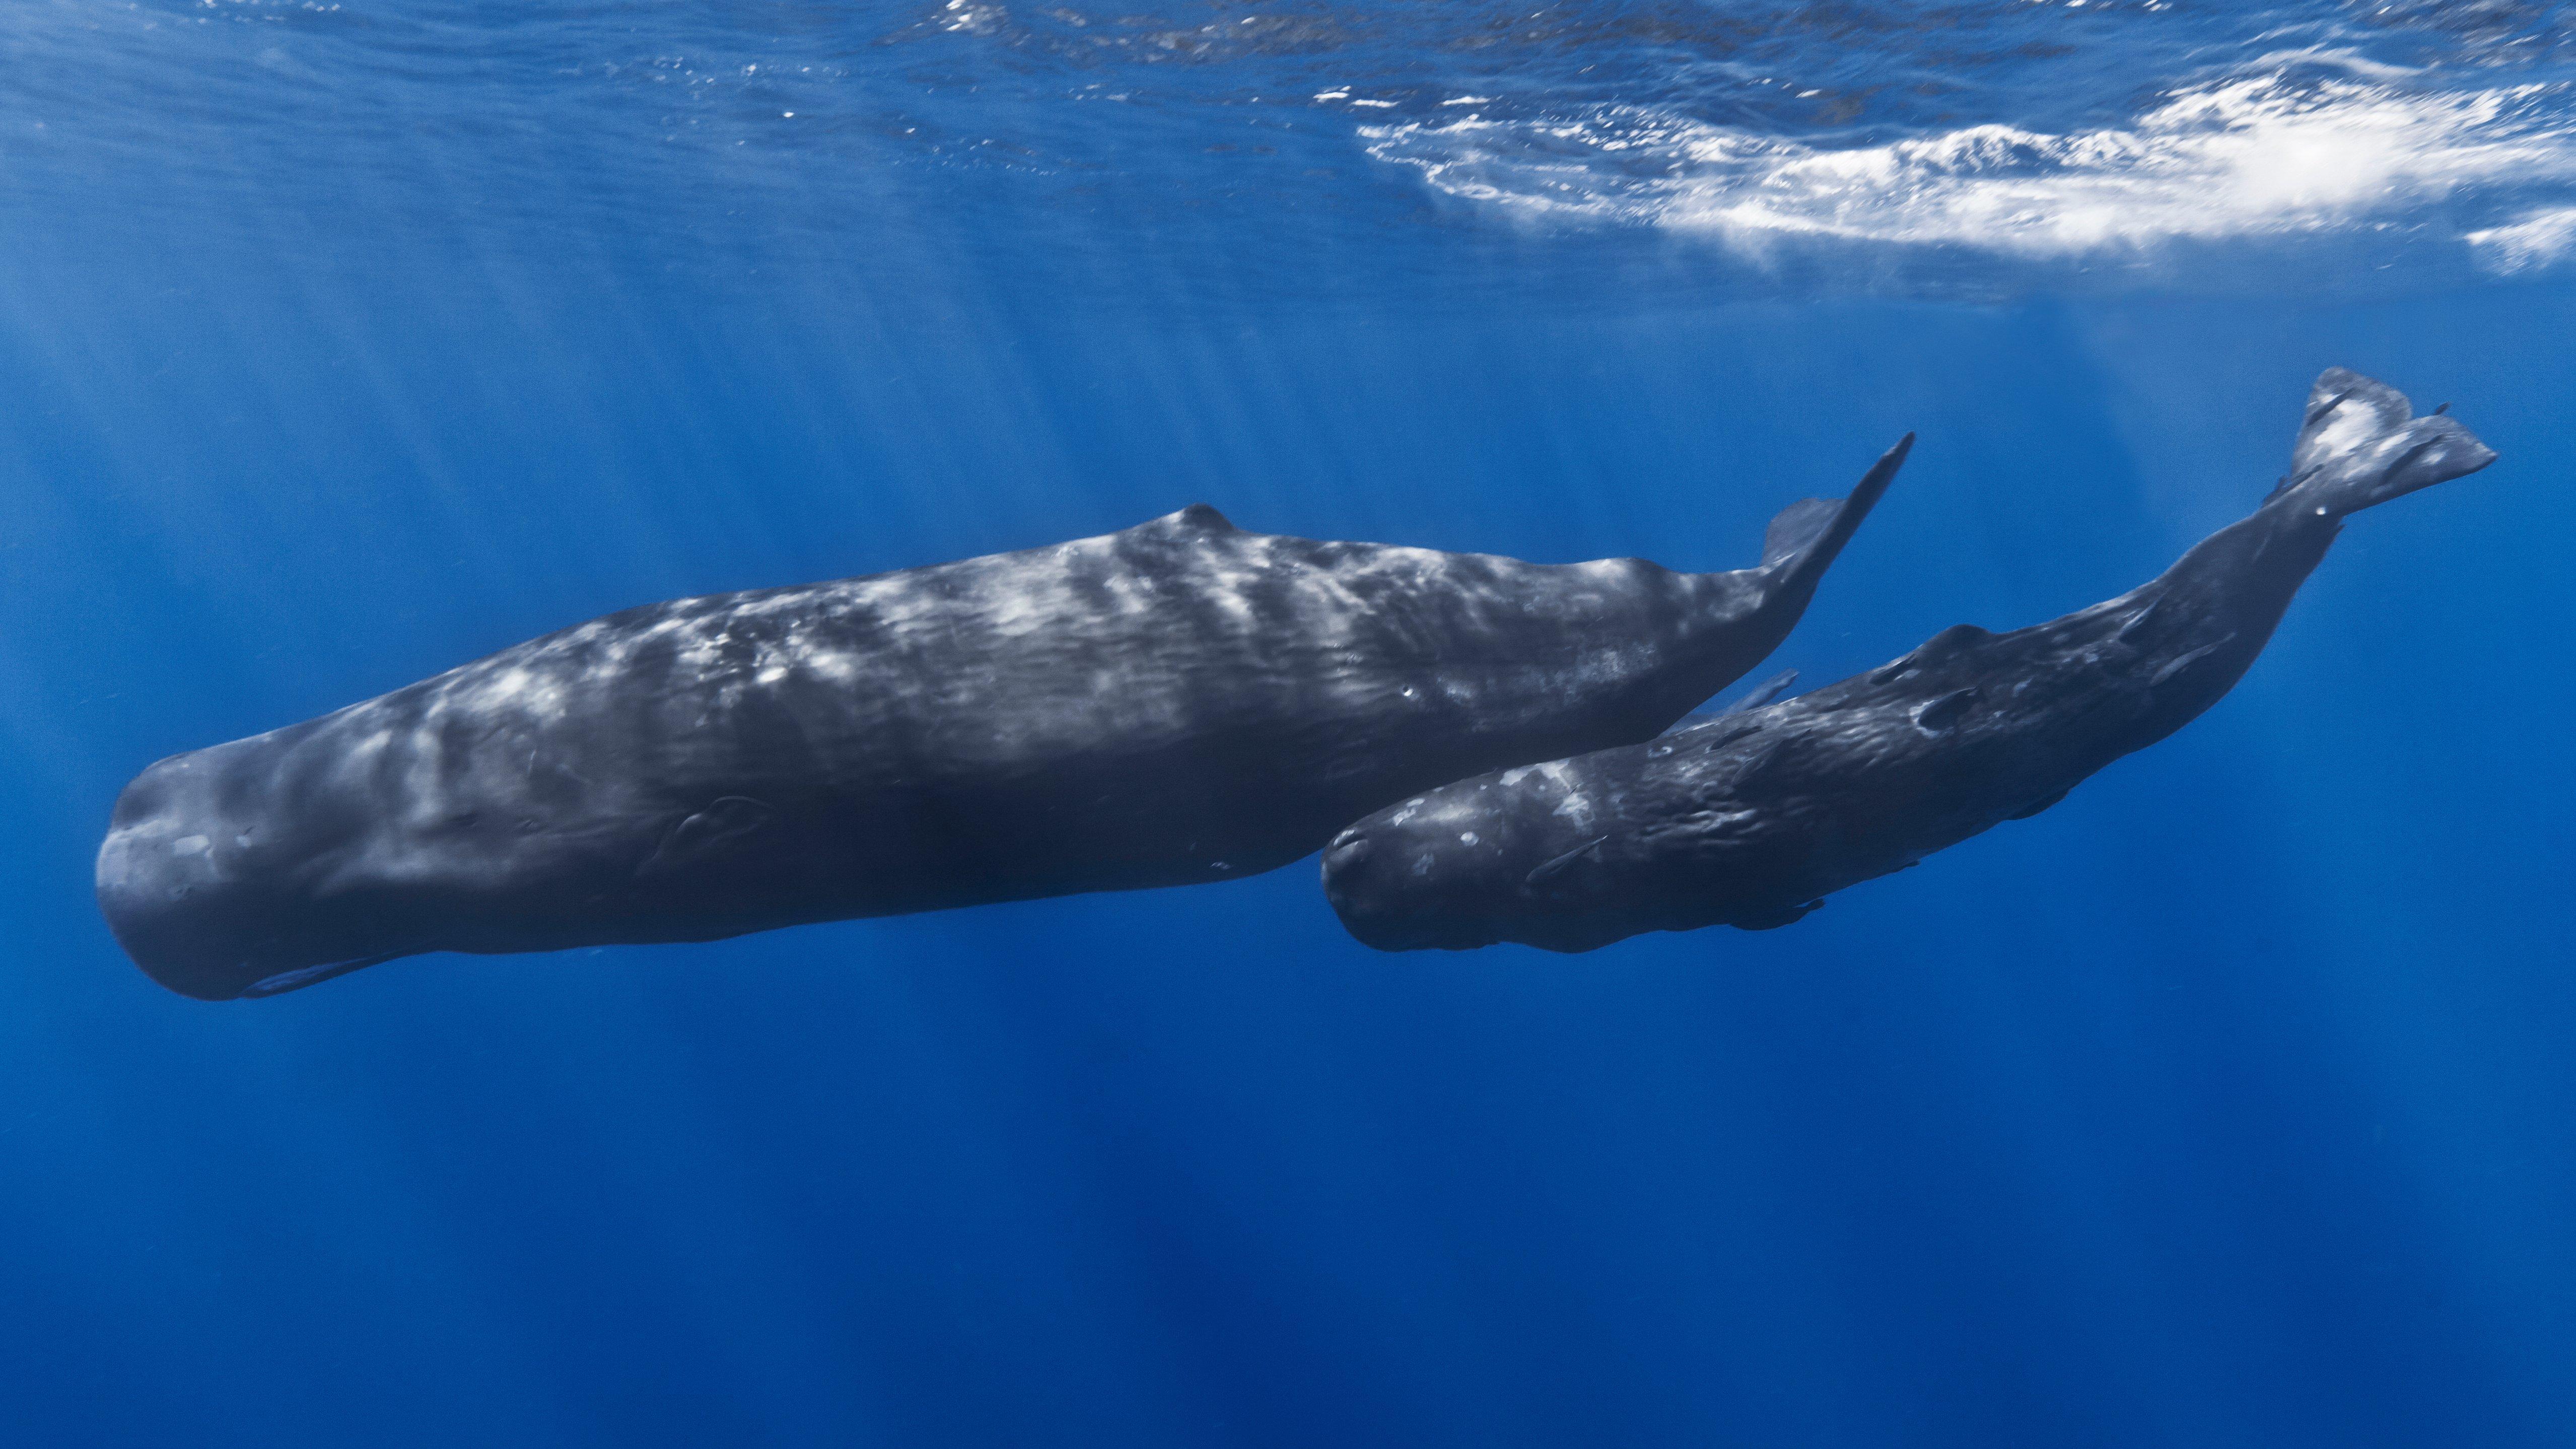 A mount of sperm a whale produces